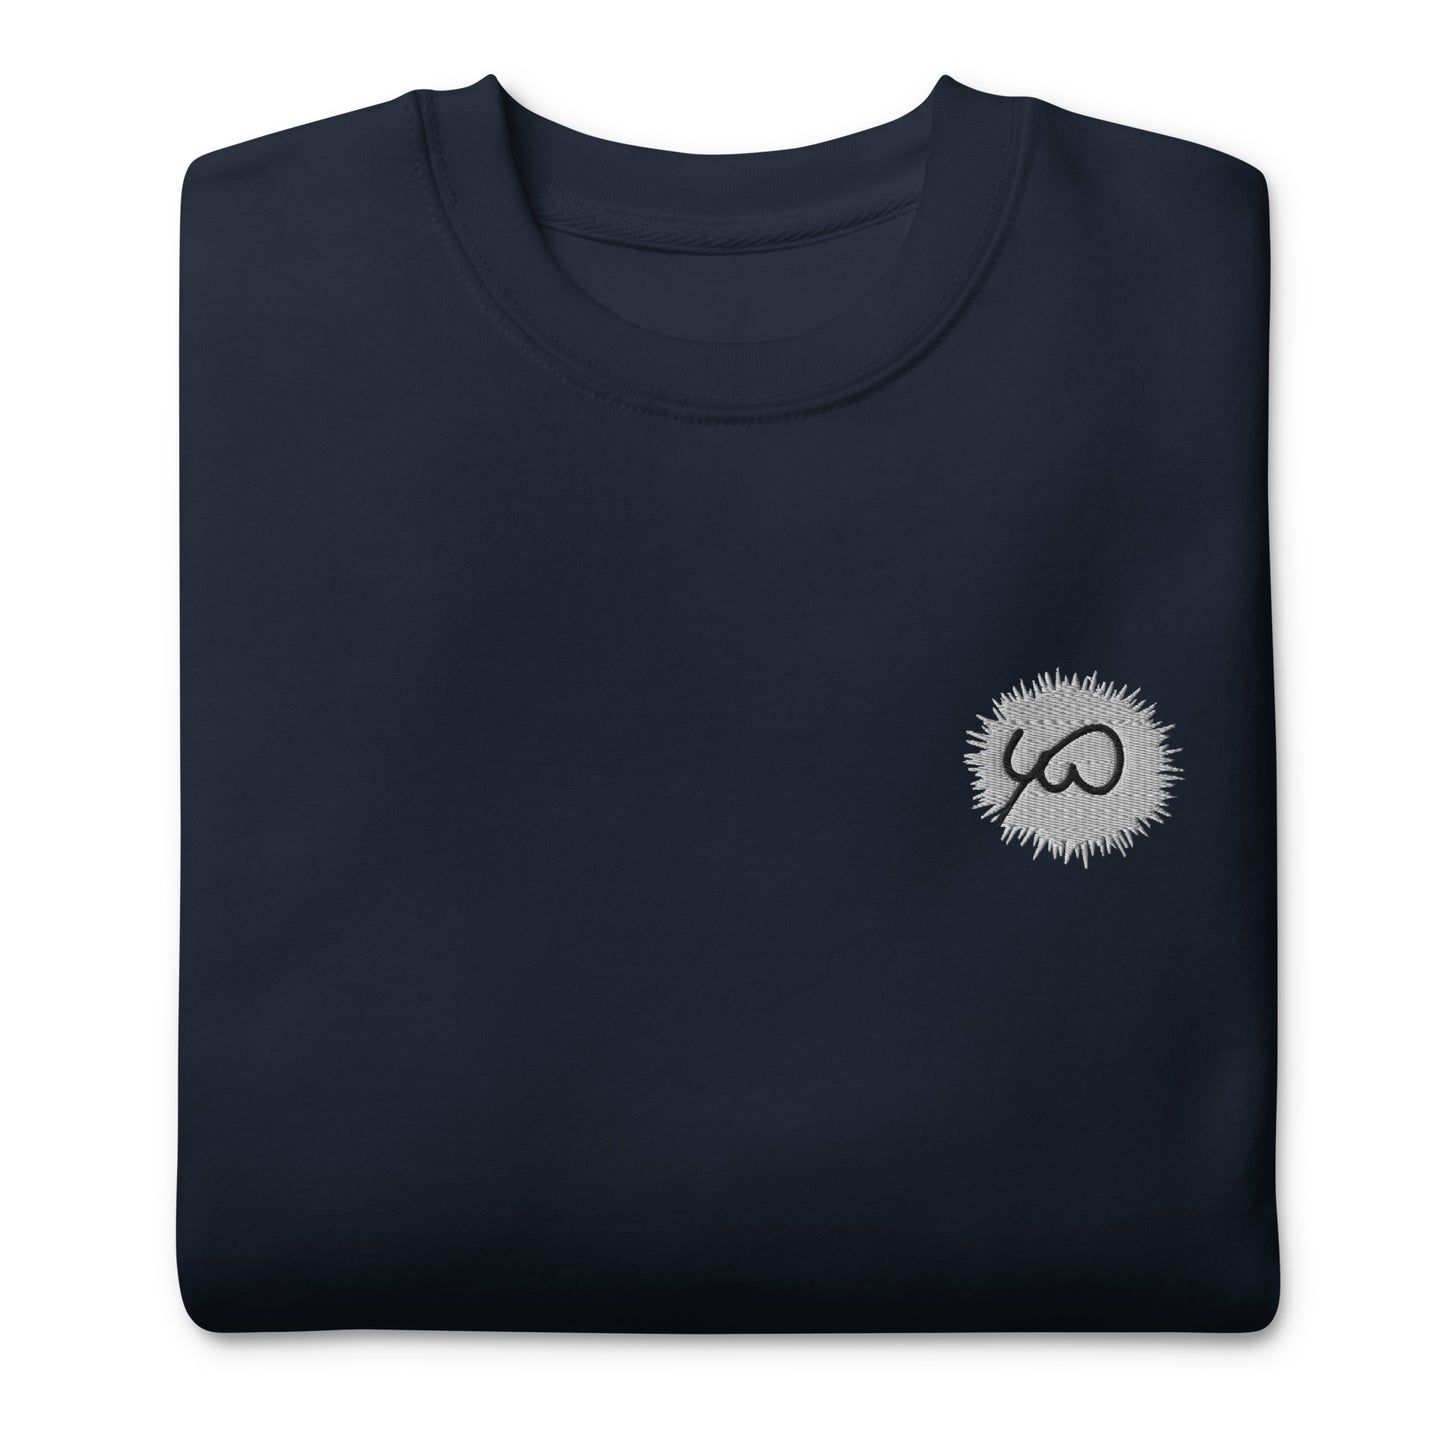 Navy Unisex Premium Sweatshirt -Front design with Black and White Embroidery of Uniwari Logo